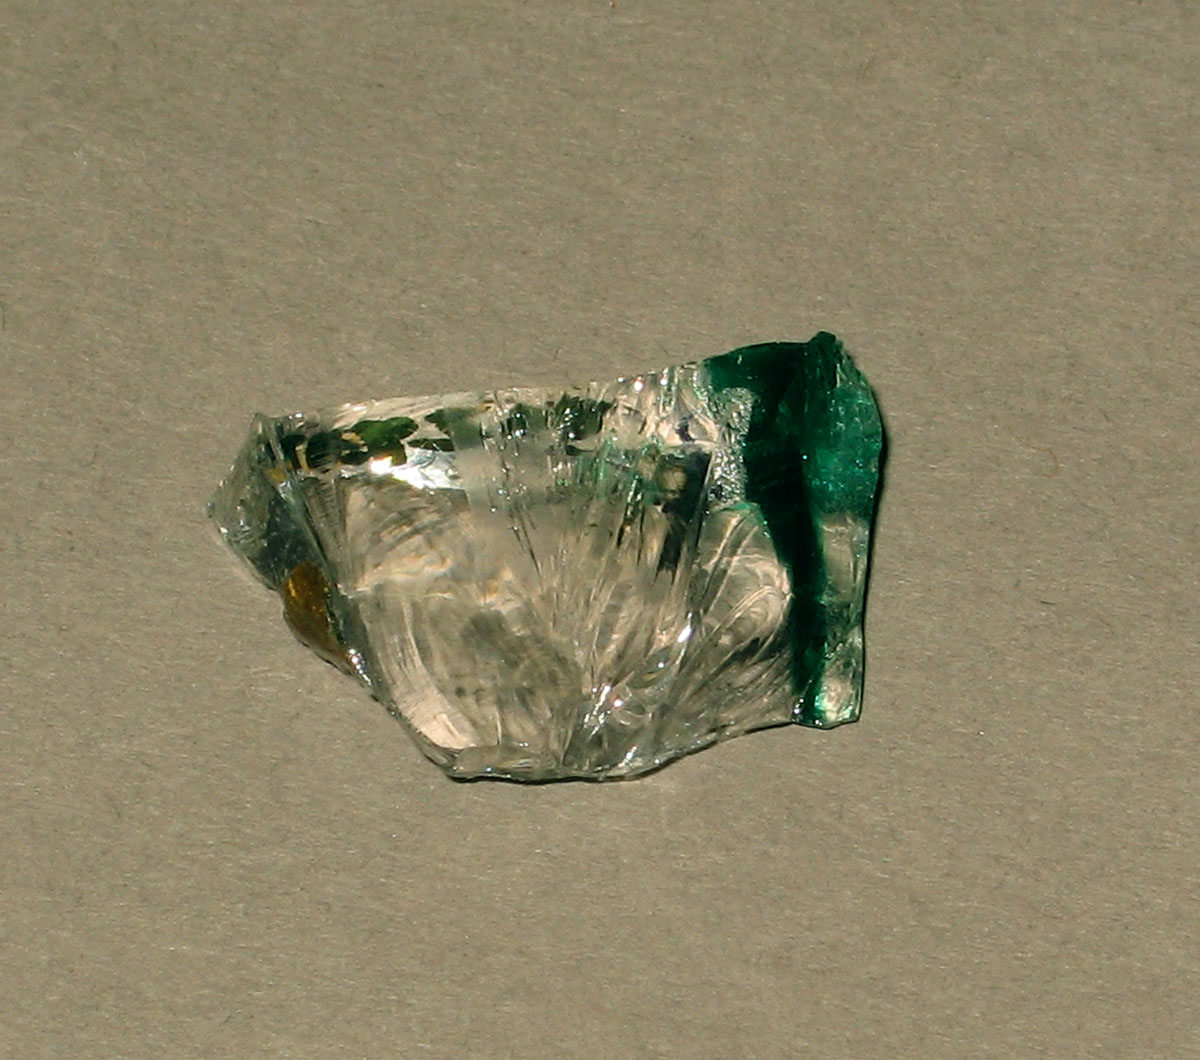 1971.0024.017 Glass fragment